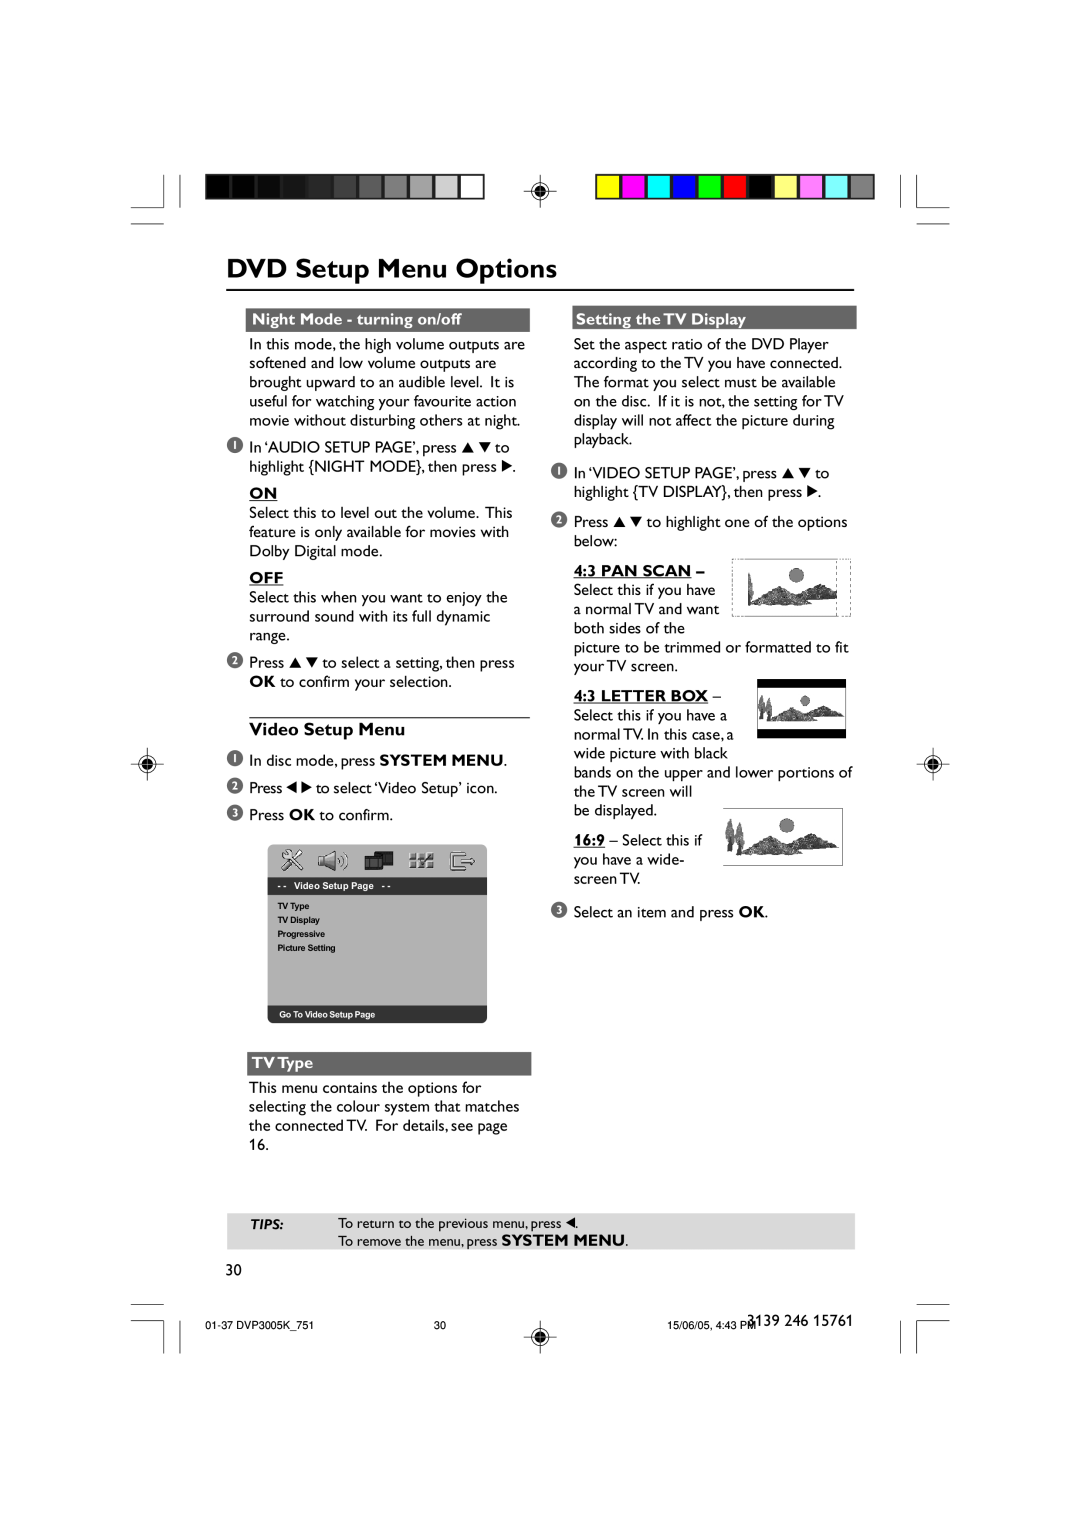 Philips DVP3005K/74 Video Setup Menu, Night Mode - turning on/off, Setting the TV Display, TV Type, DVD Setup Menu Options 